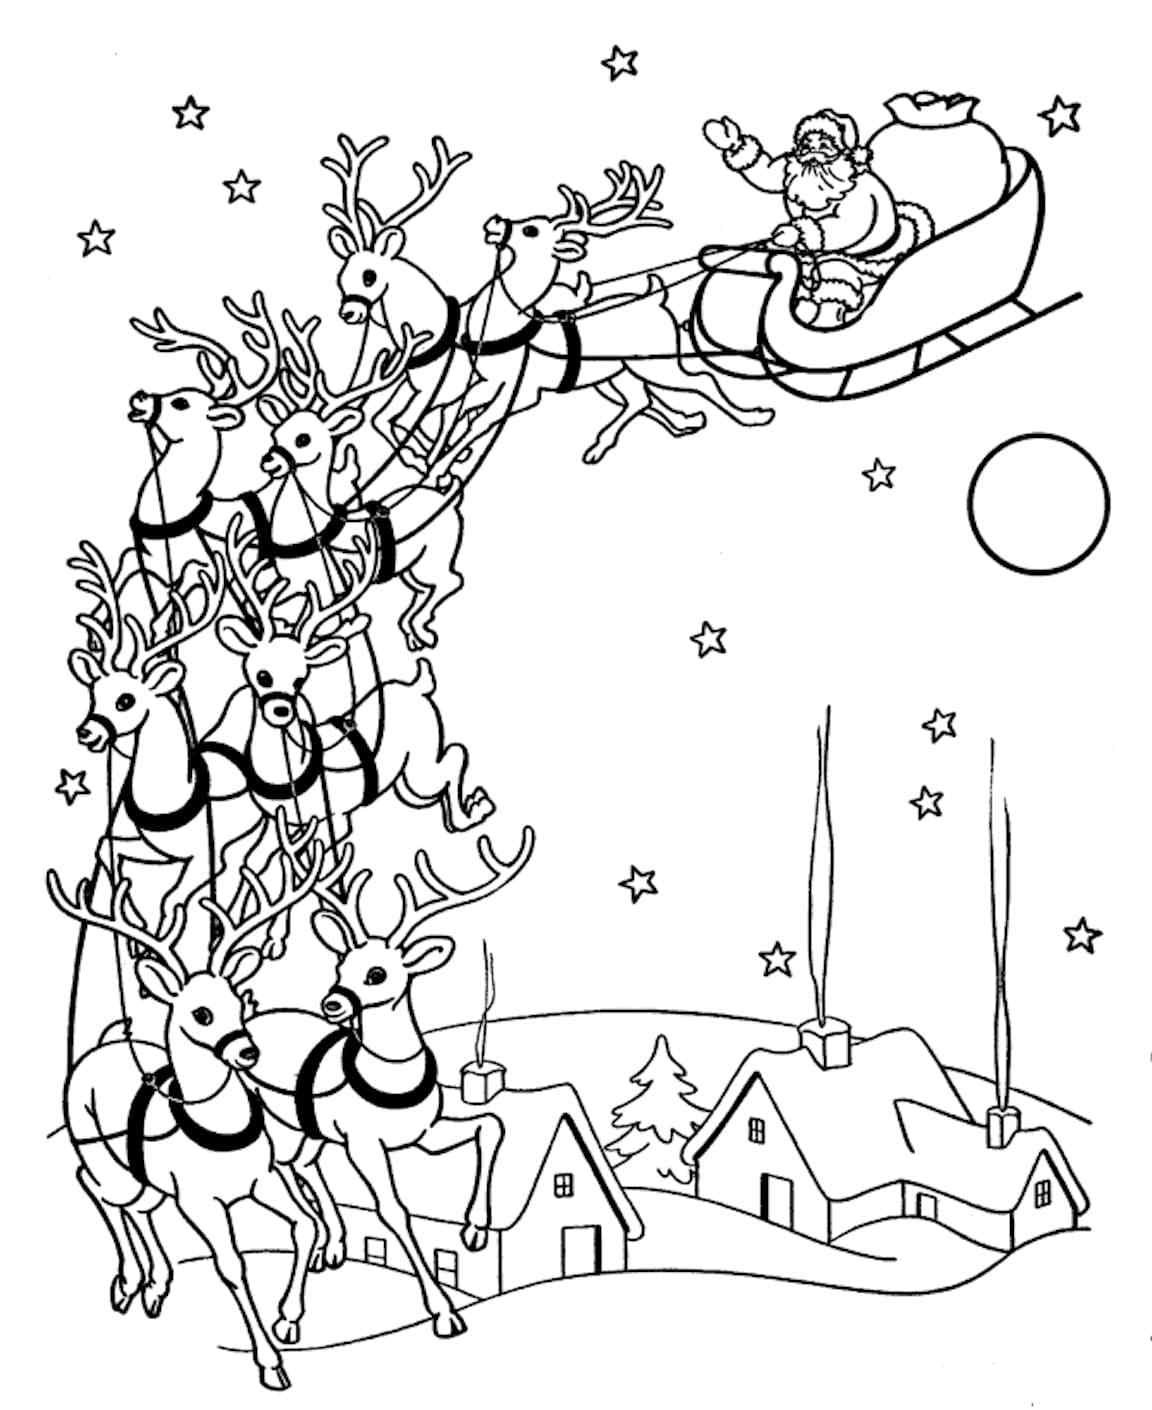 Reindeer Santa Has In His Team Coloring Pages - Coloring Cool